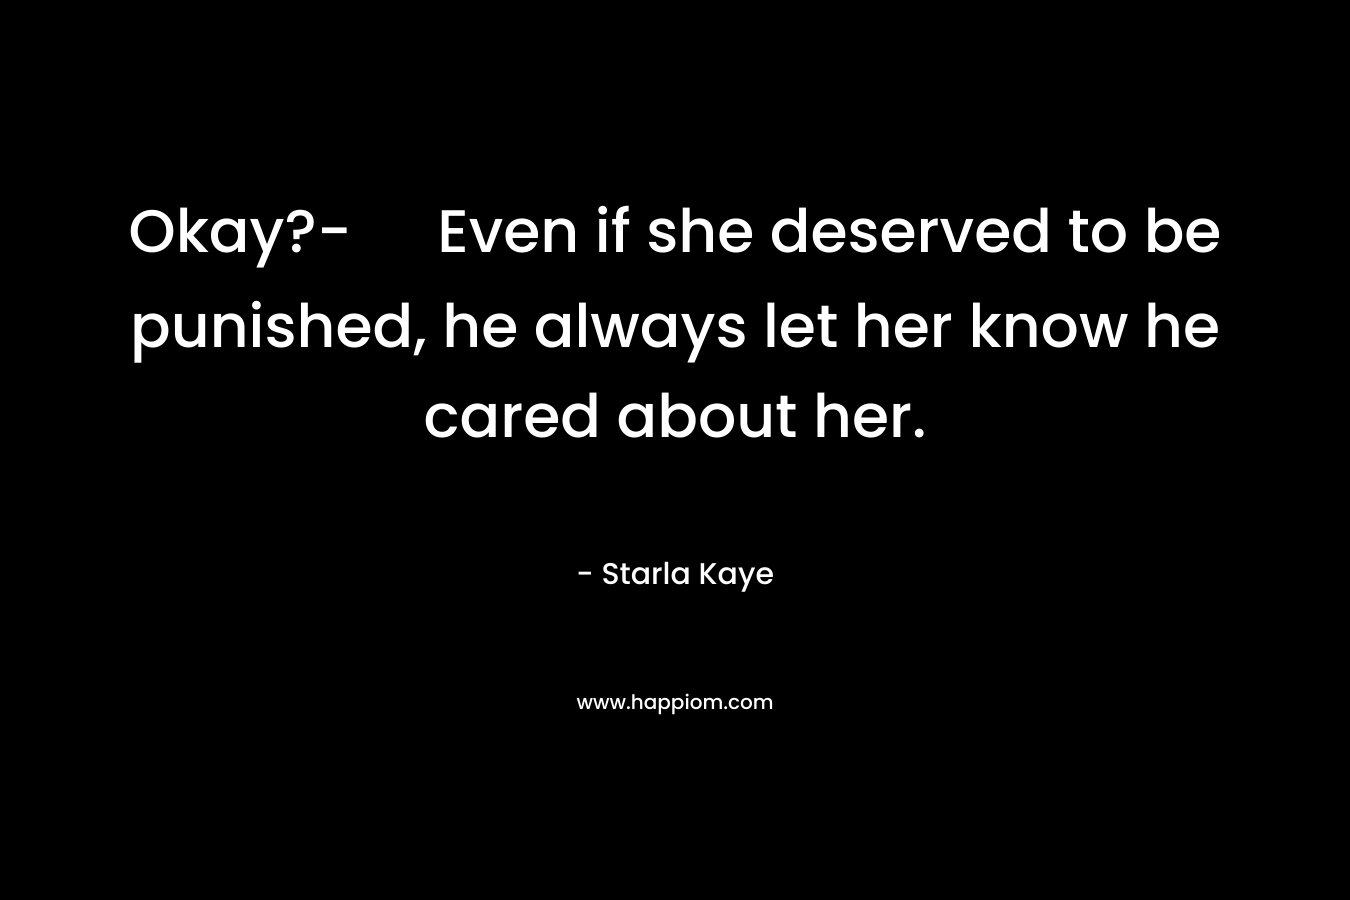 Okay?- Even if she deserved to be punished, he always let her know he cared about her.